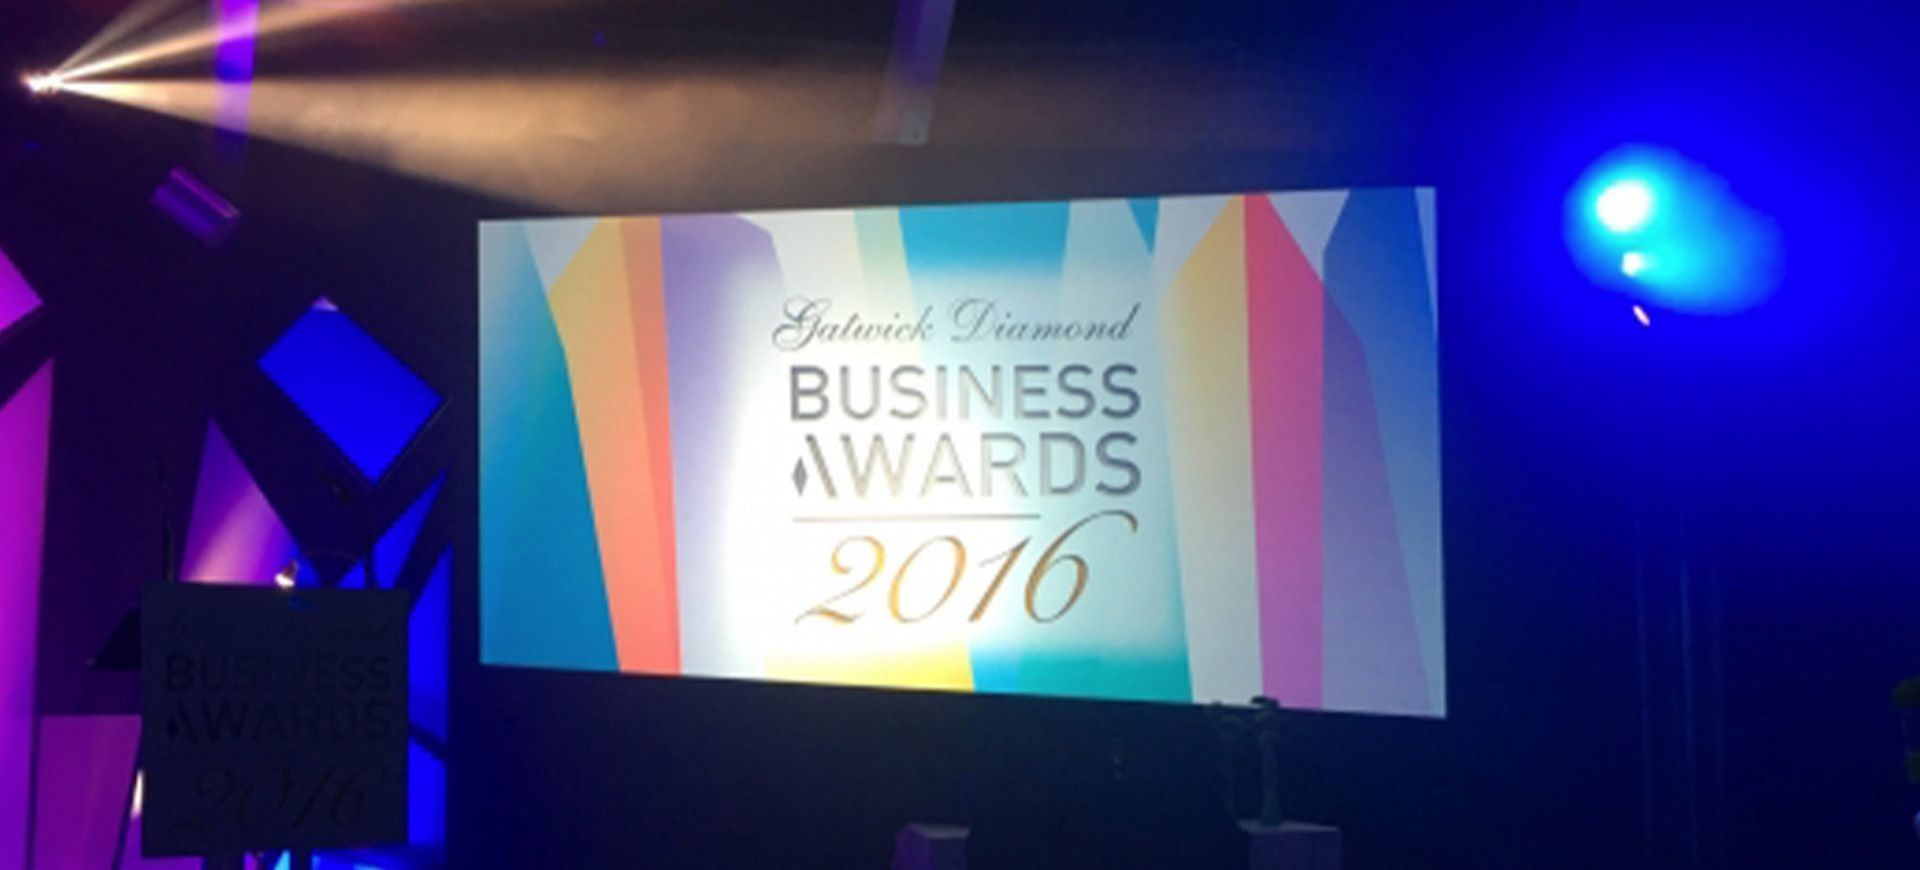 The Gatwick Diamond Business Awards 2016